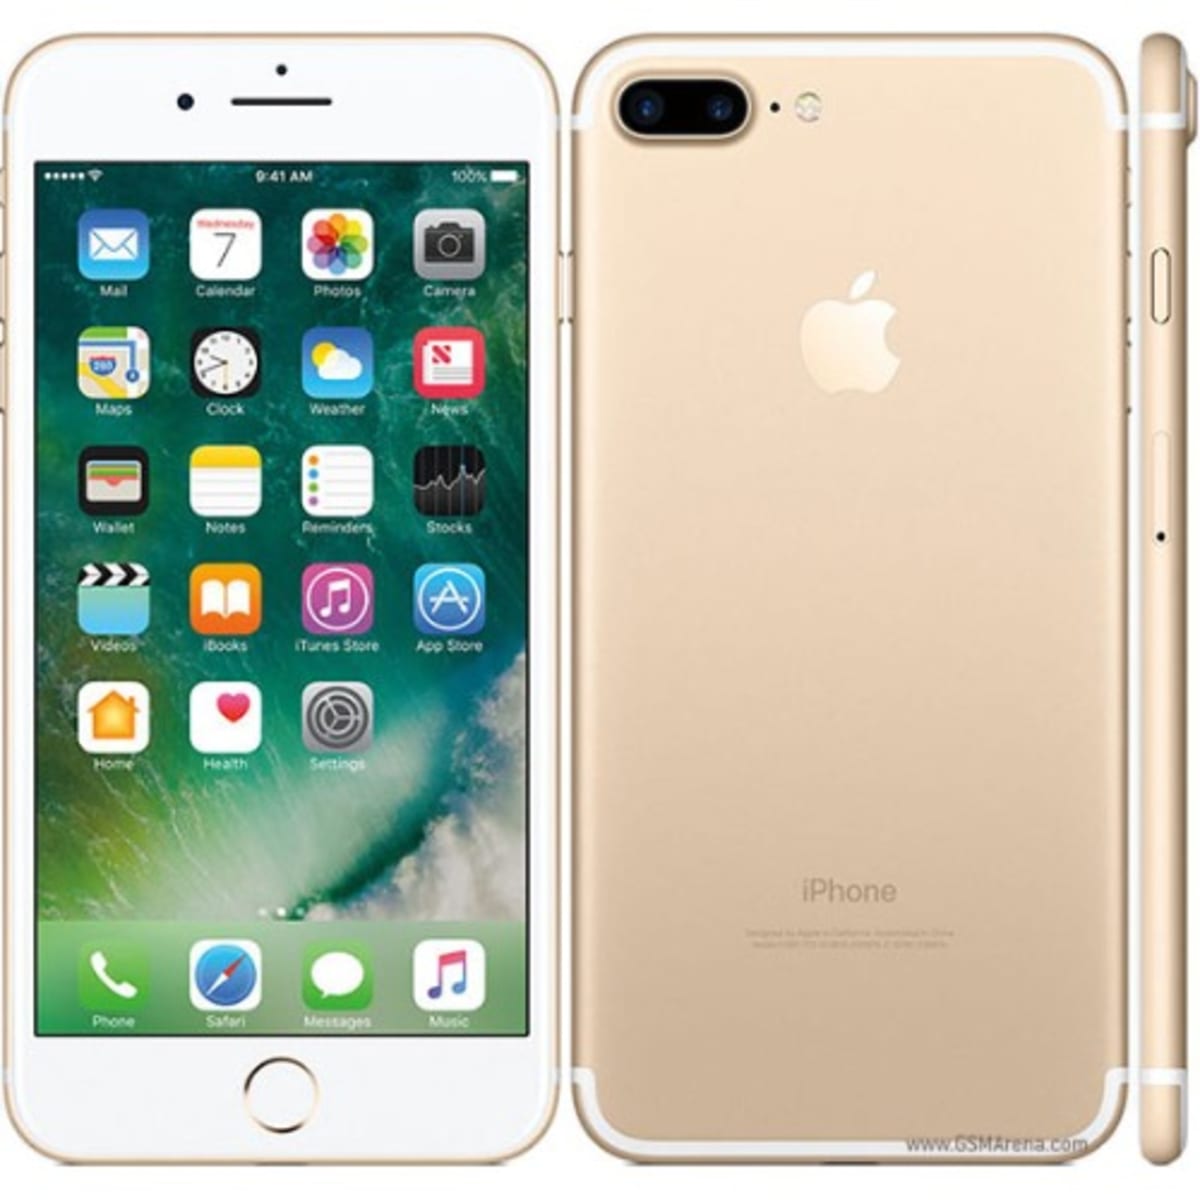 iPhone 7 Gold 128 GB Softbank - スマートフォン/携帯電話